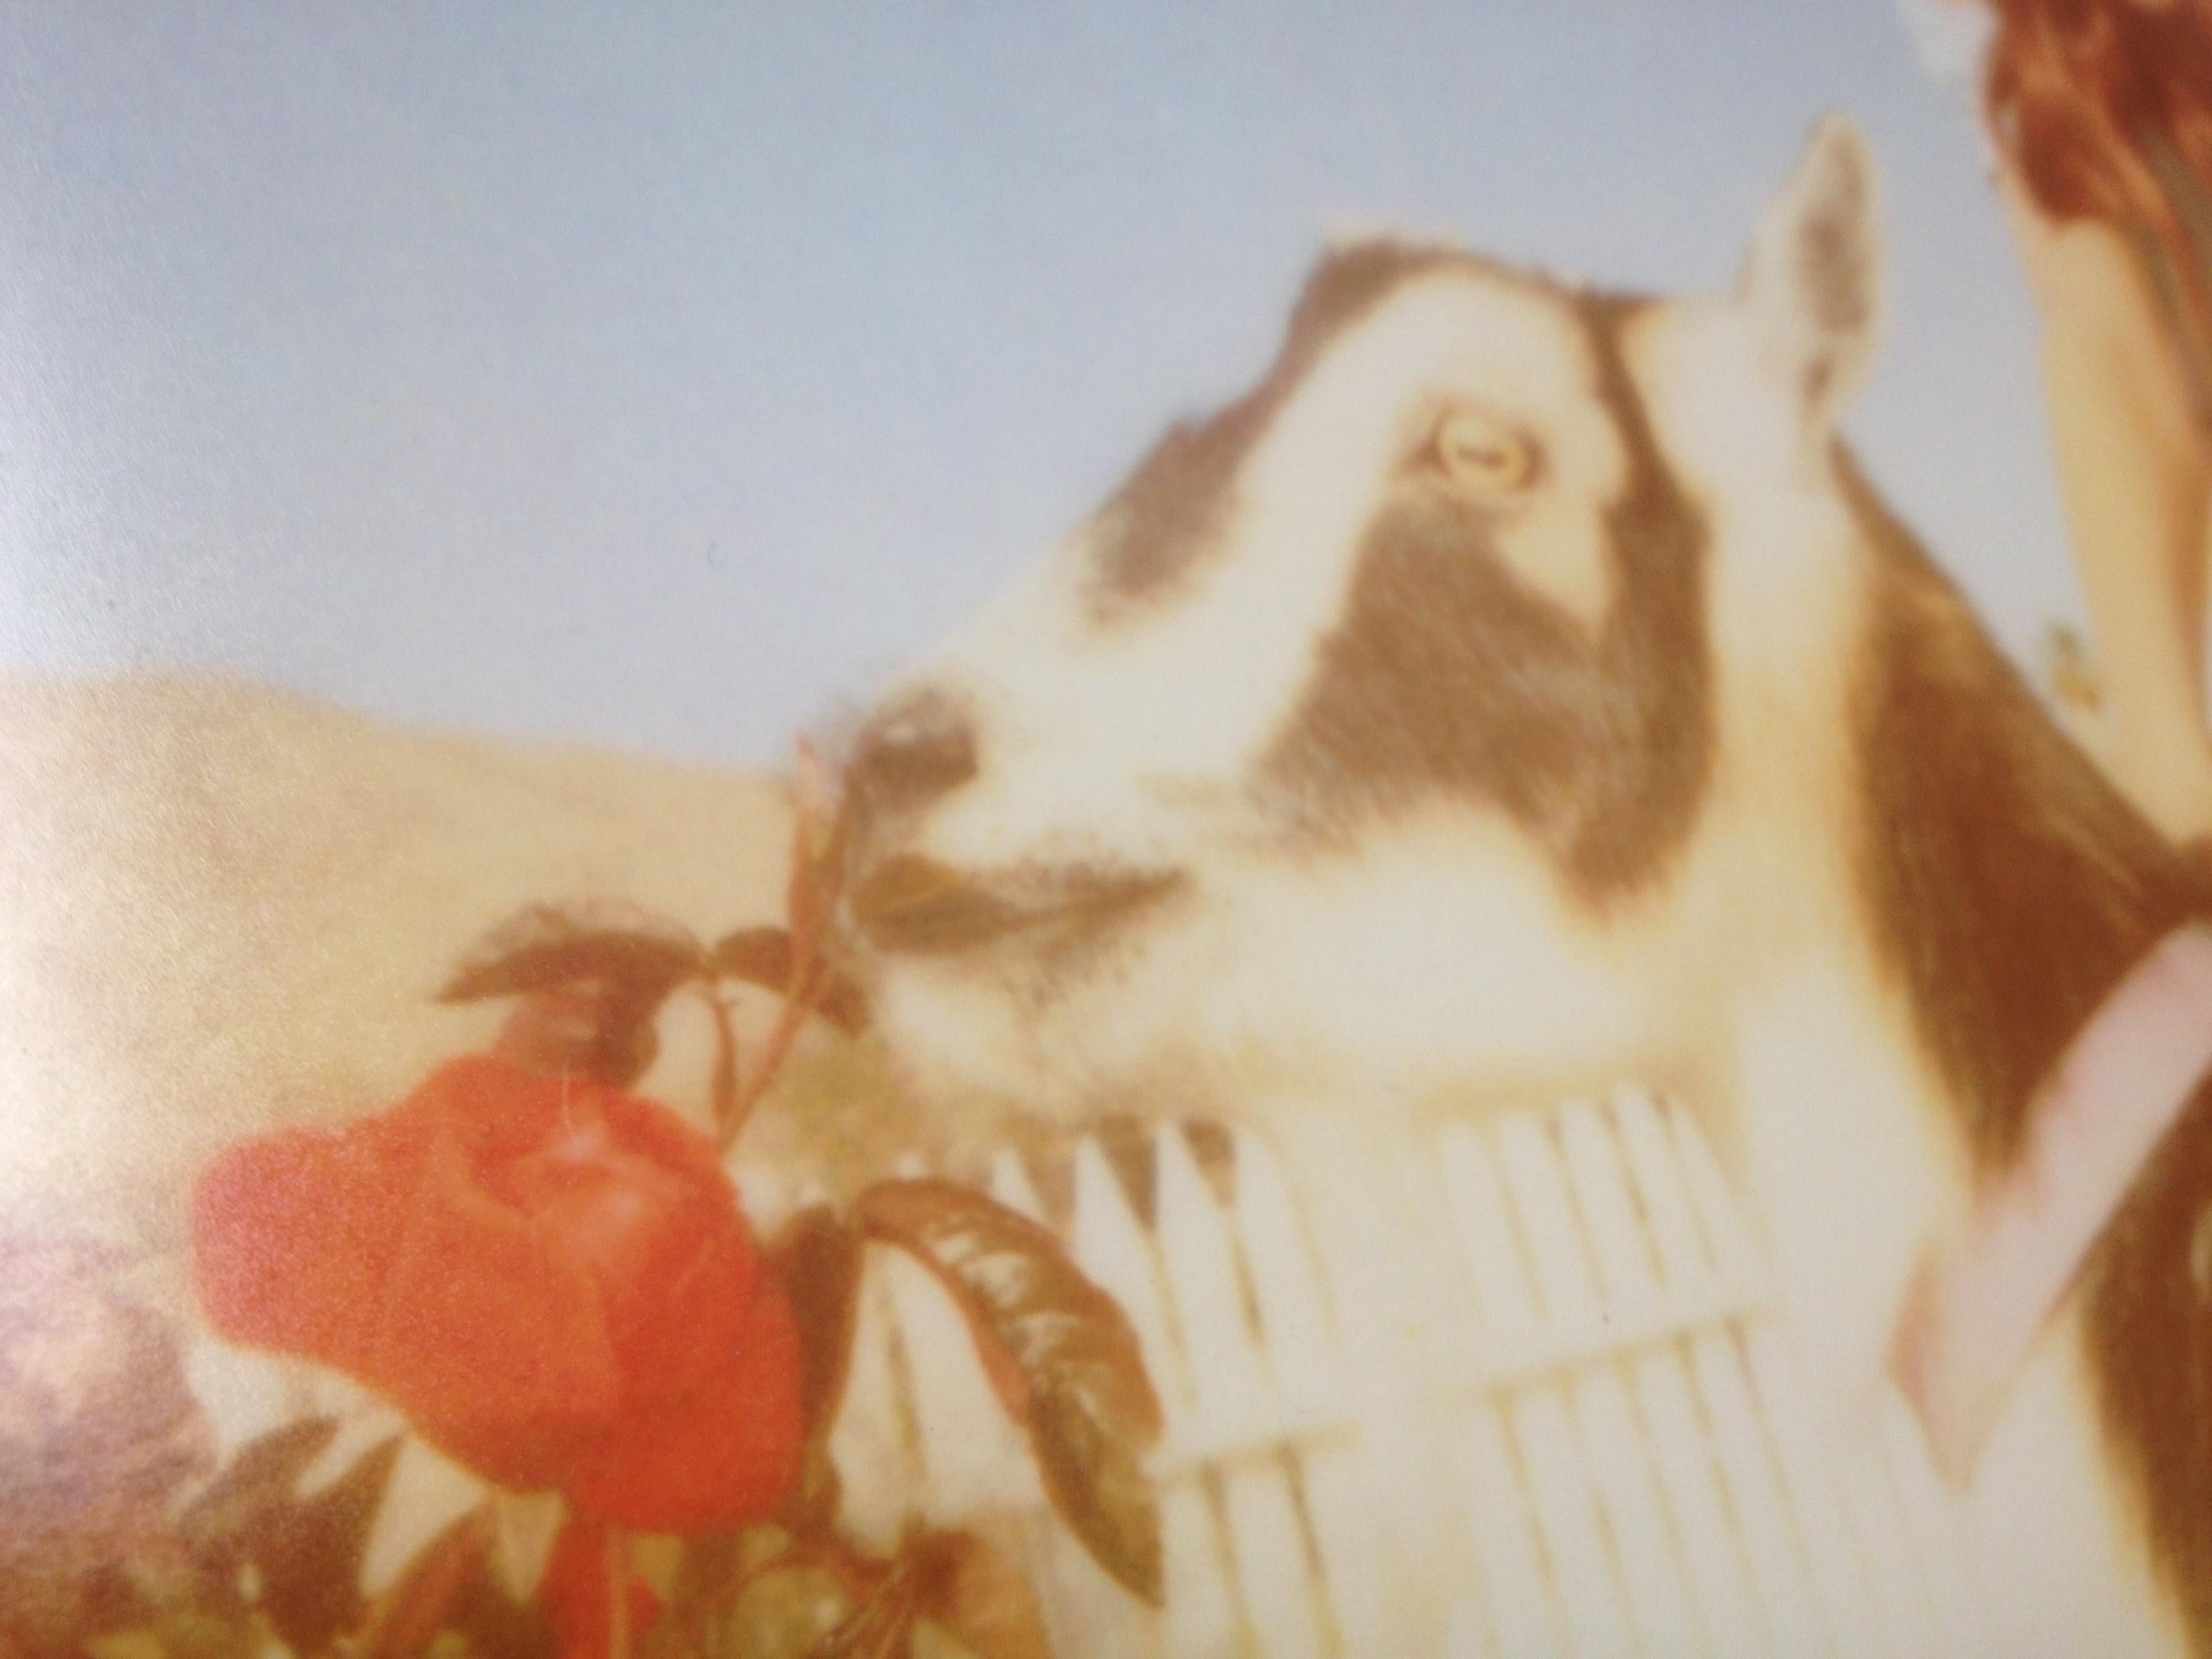 Heather and Zeuss the Goat featuring Heather Megan Christie - Polaroid, Color - Photograph by Stefanie Schneider